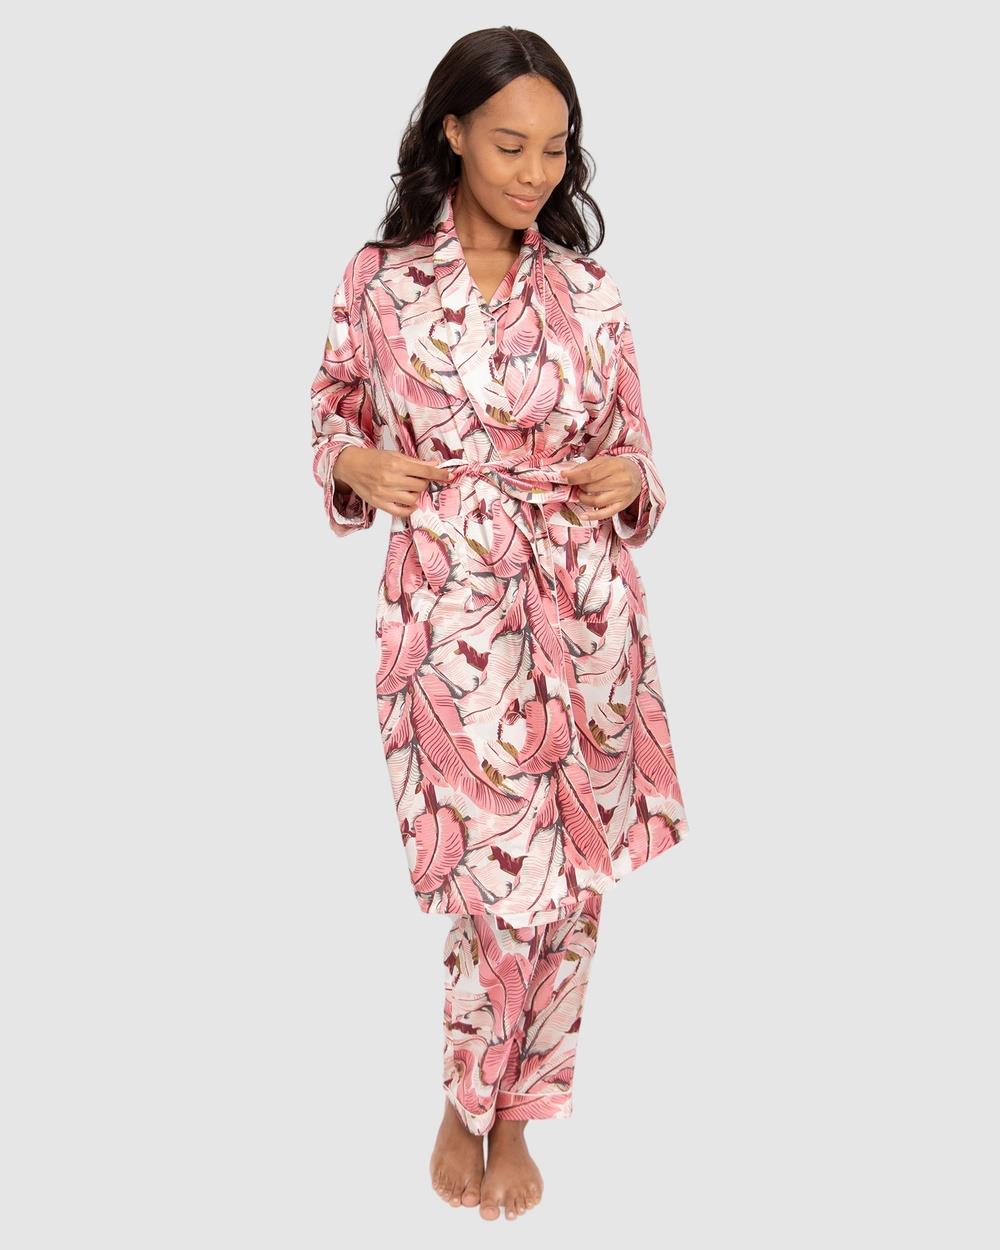 Sant And Abel - Martinique® Silk Banana Leaf Robe - Sleepwear (Pink) Martinique® Silk Banana Leaf Robe